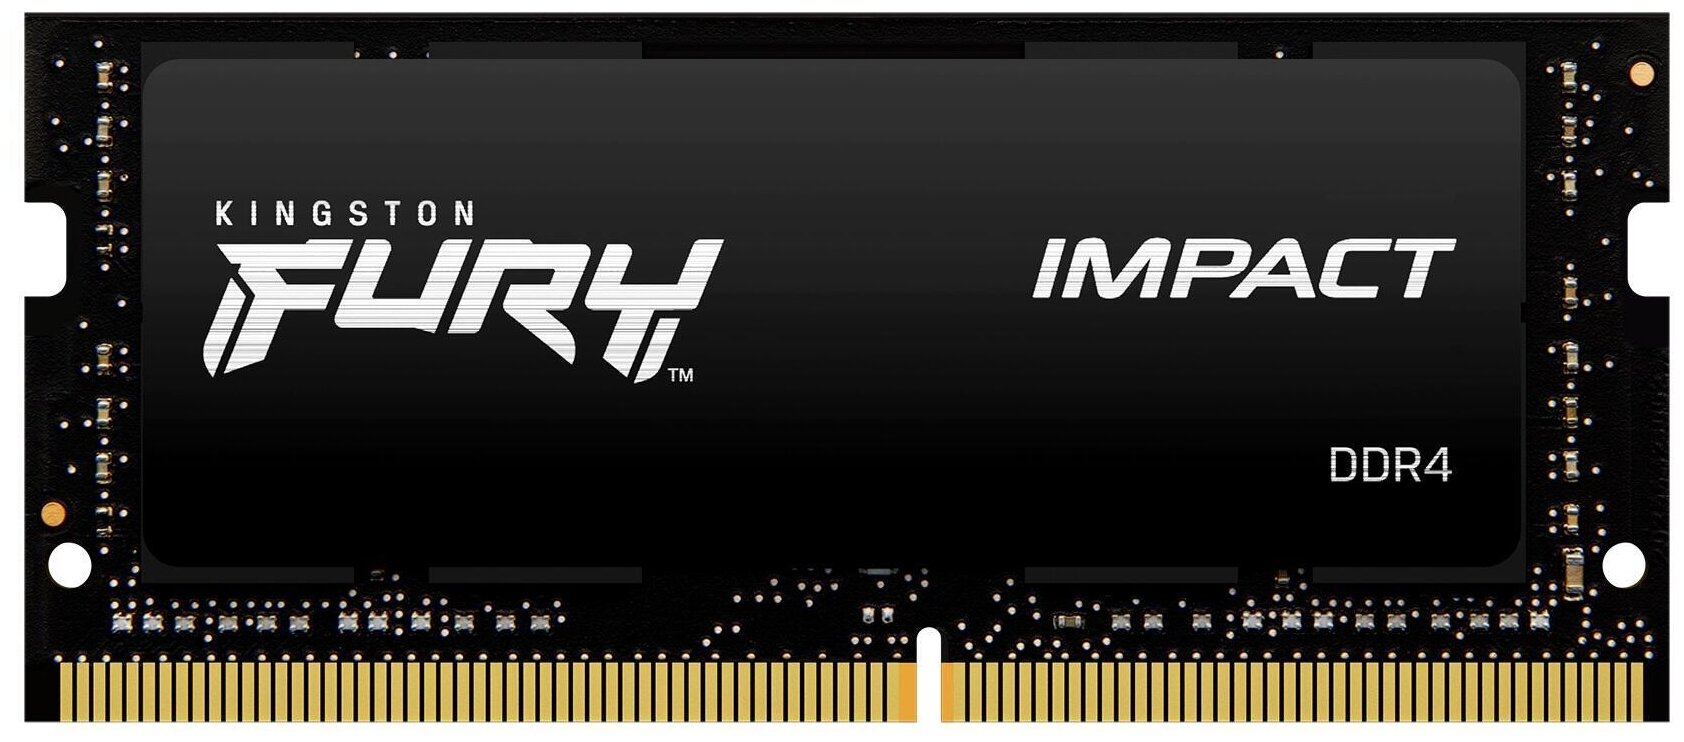 Модуль памяти Kingston Fury Impact DDR4 SO-DIMM 3200MHz PC25600 CL20 - 32Gb KF432S20IB/32